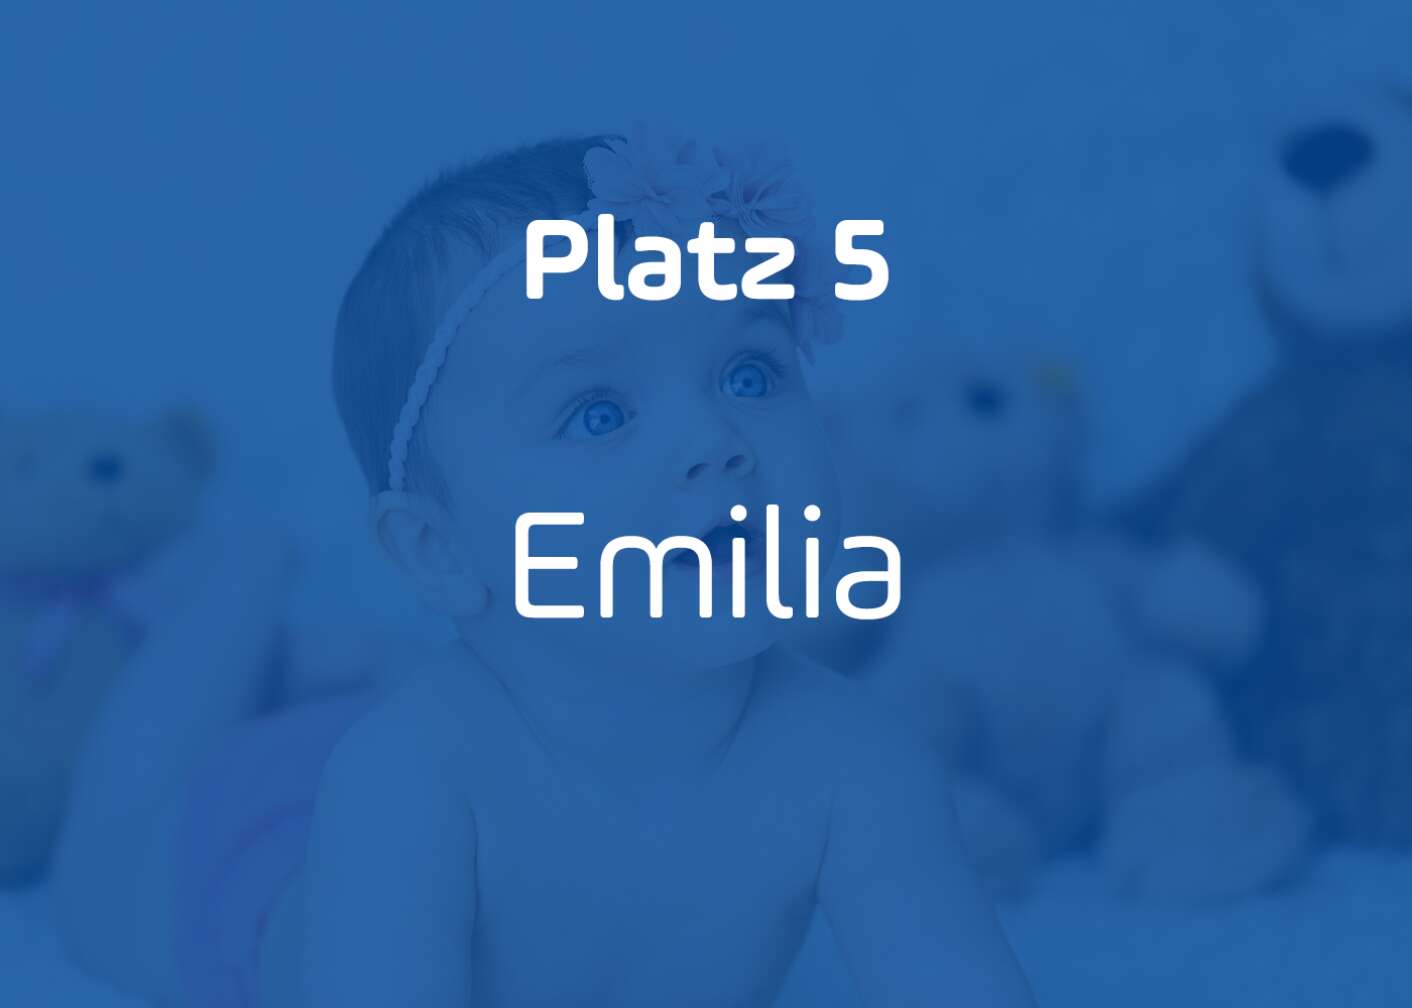 Emilia Platz 5